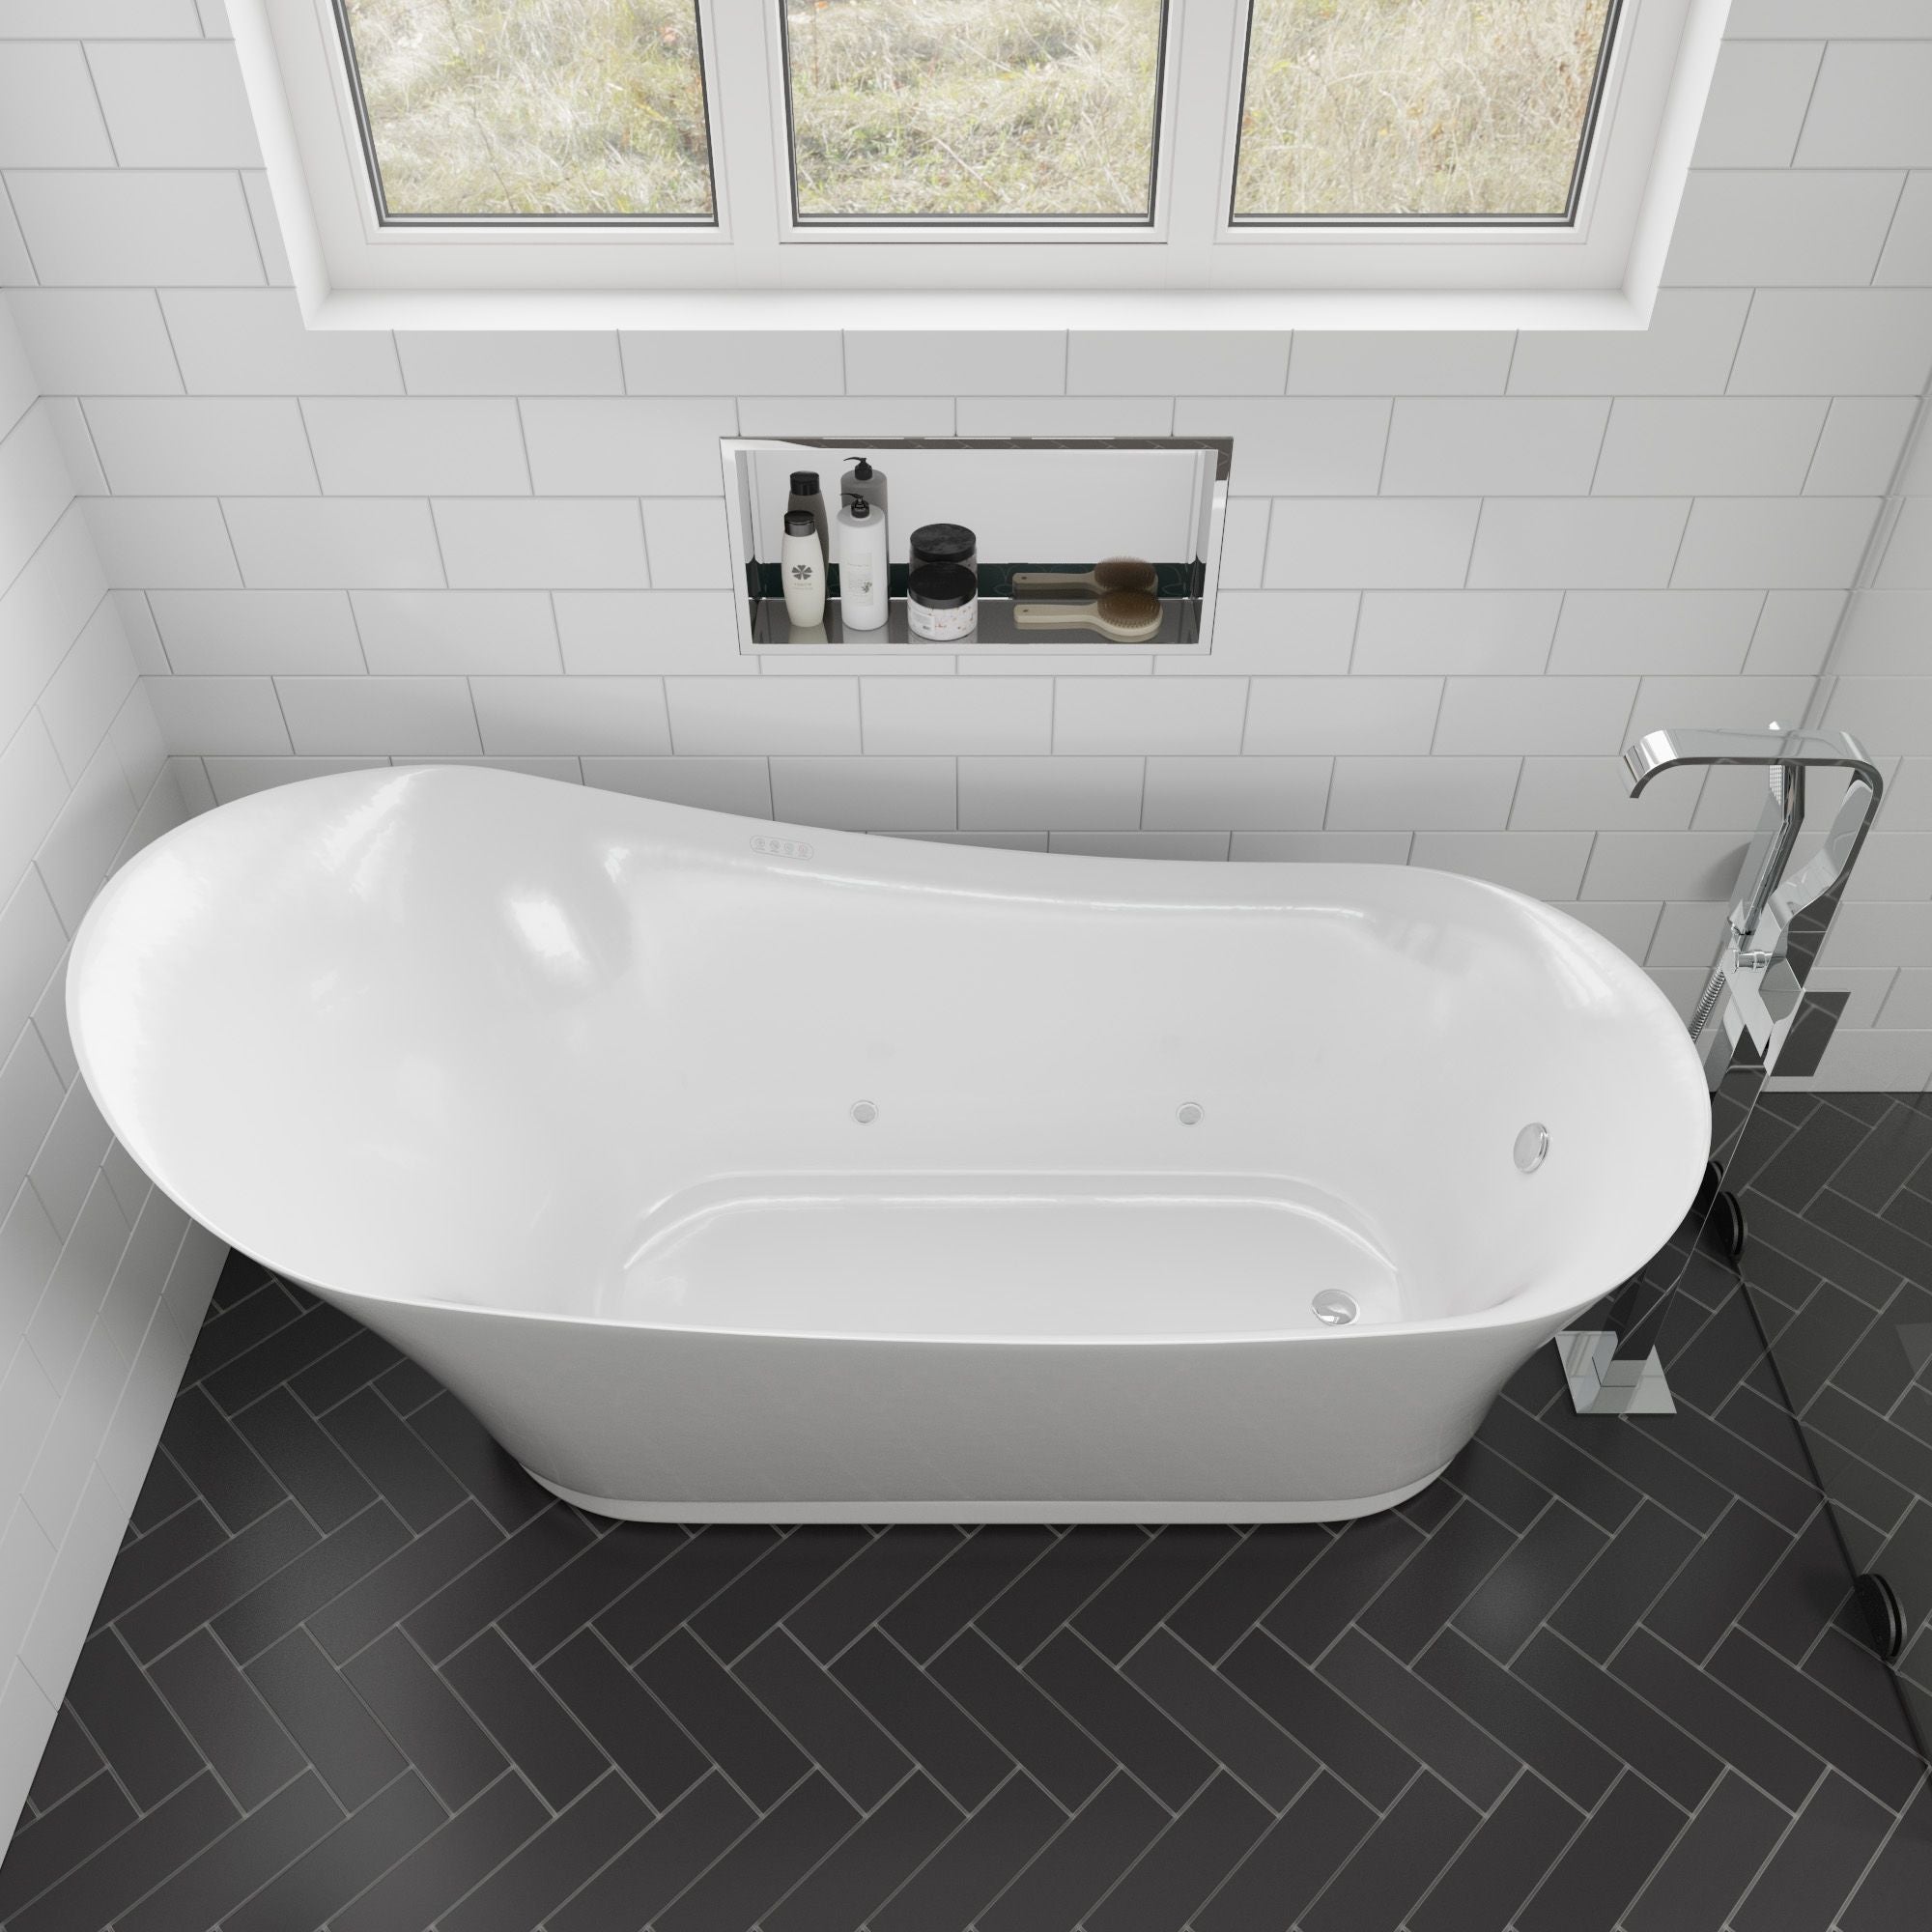 ALFI ALFI brand 8 x 36 Polished Stainless Steel Vertical Triple Shelf Bath  Shower Niche